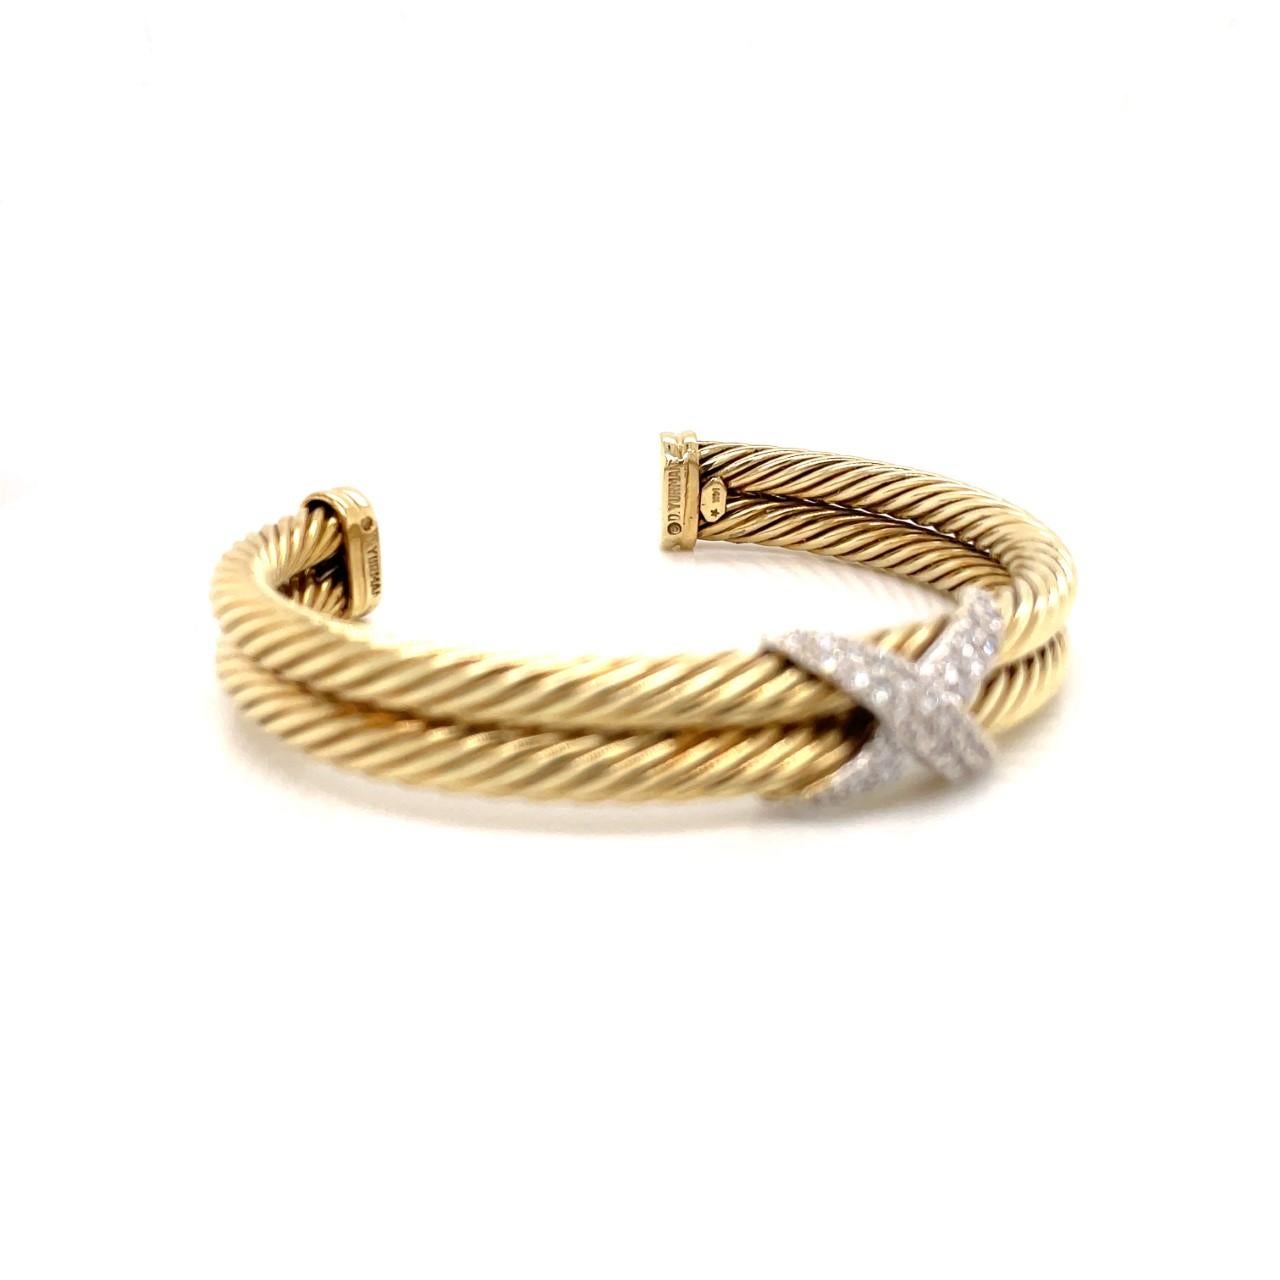 Women's David Yurman 14k Yellow Gold Crossover Cable Bracelet with Pave Diamonds